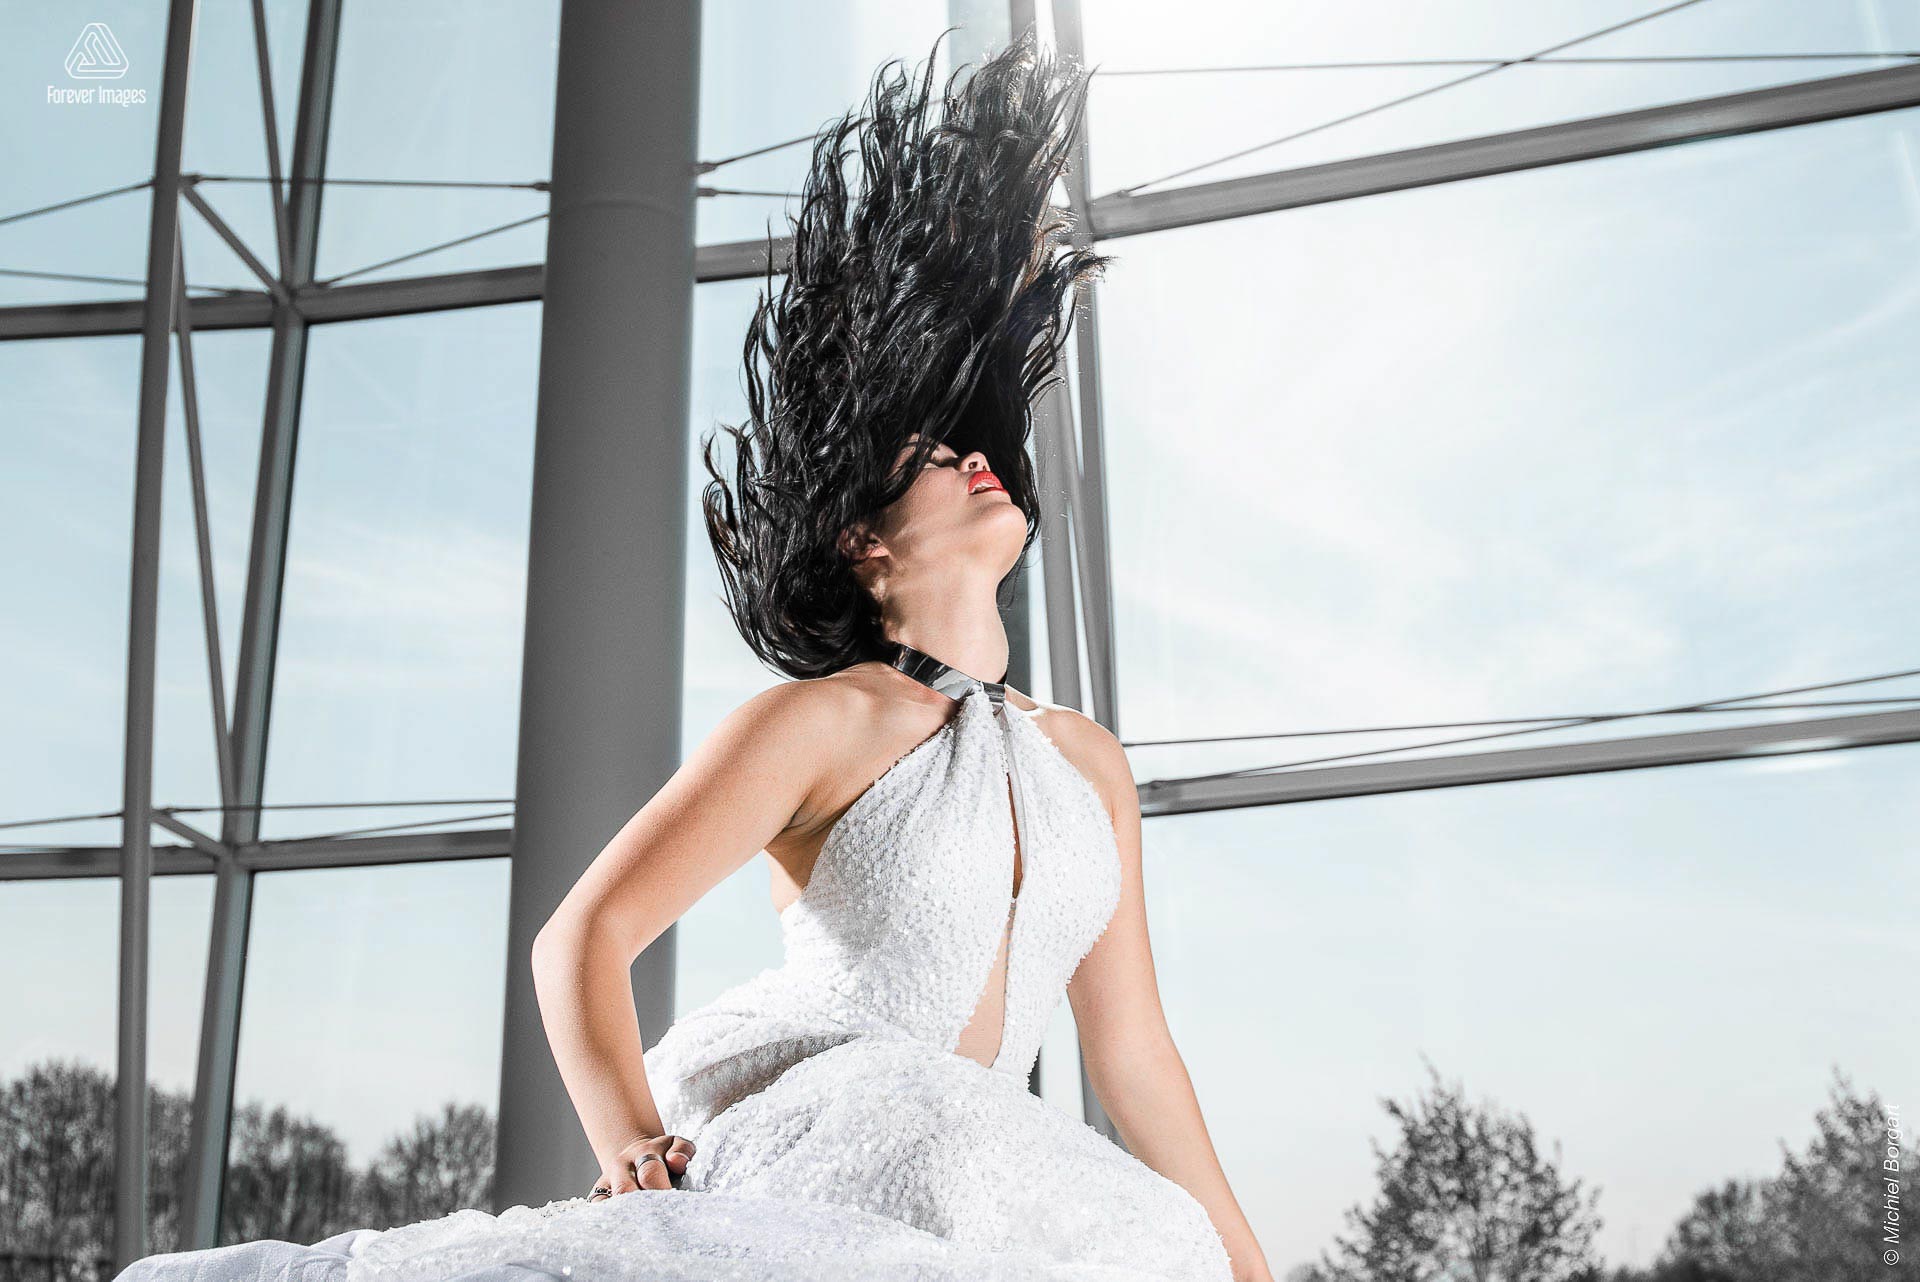 Fashion photo portrait lady white dress metal choker hair flip | Daphna Akkermans David Cardenas | Fashion Photographer Michiel Borgart - Forever Images.